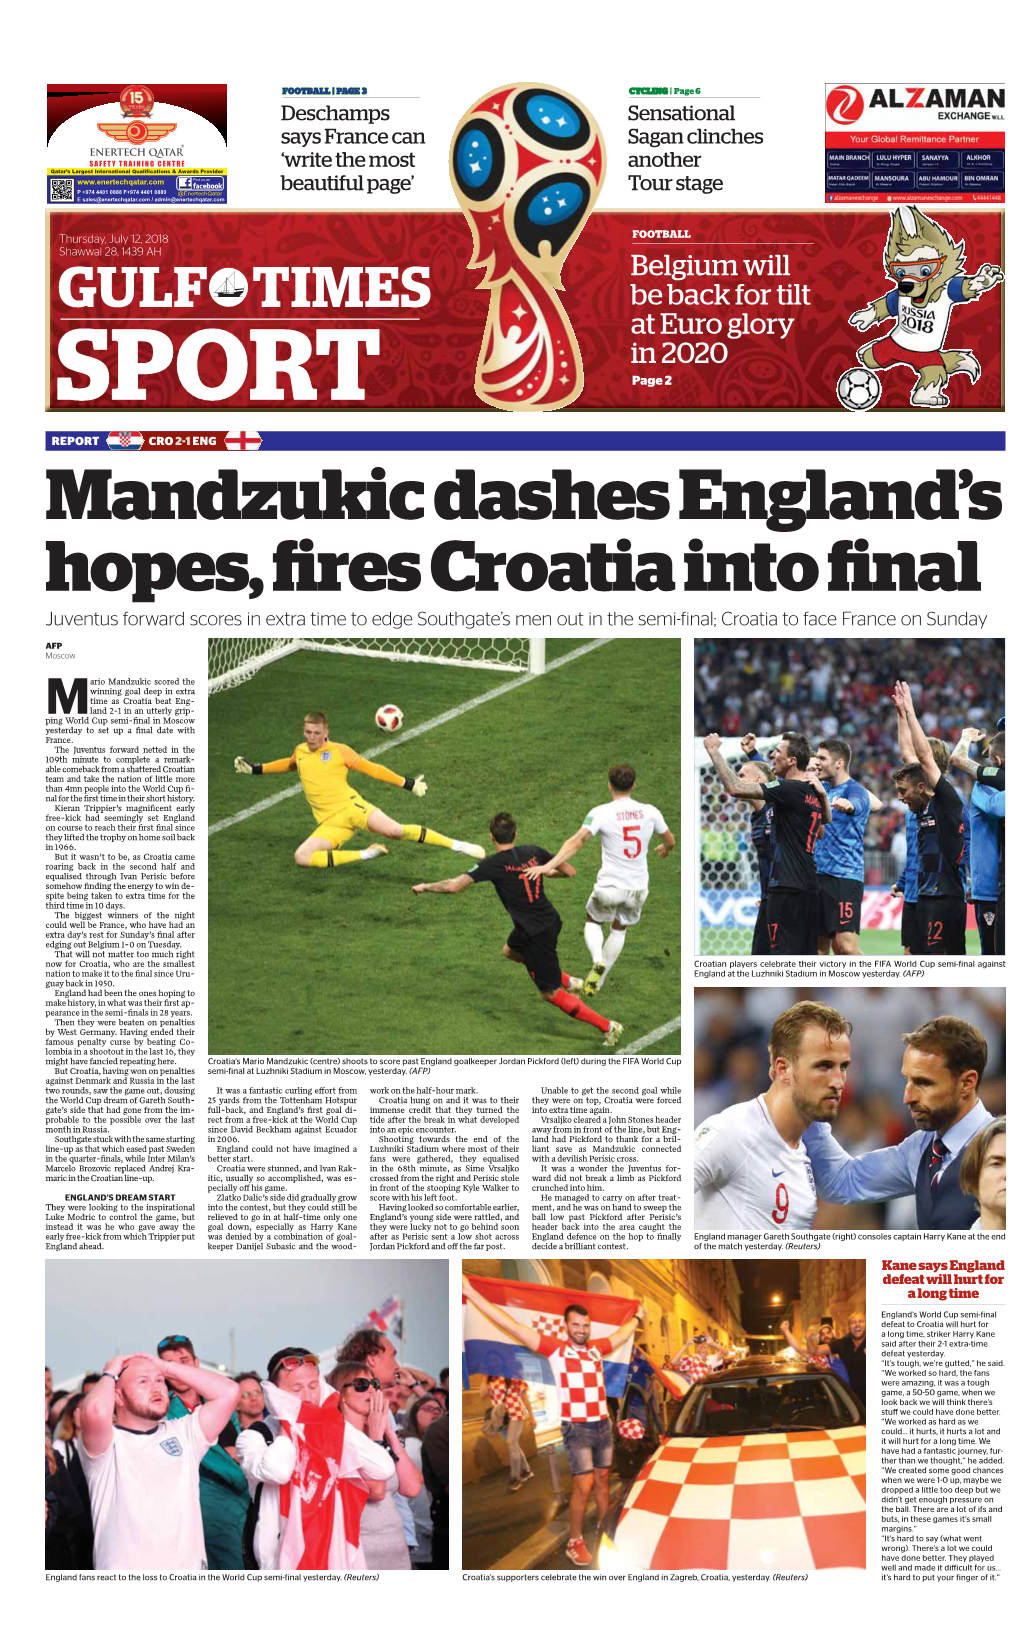 Mandzukic Dashes England's Hopes, Fires Croatia Into Final